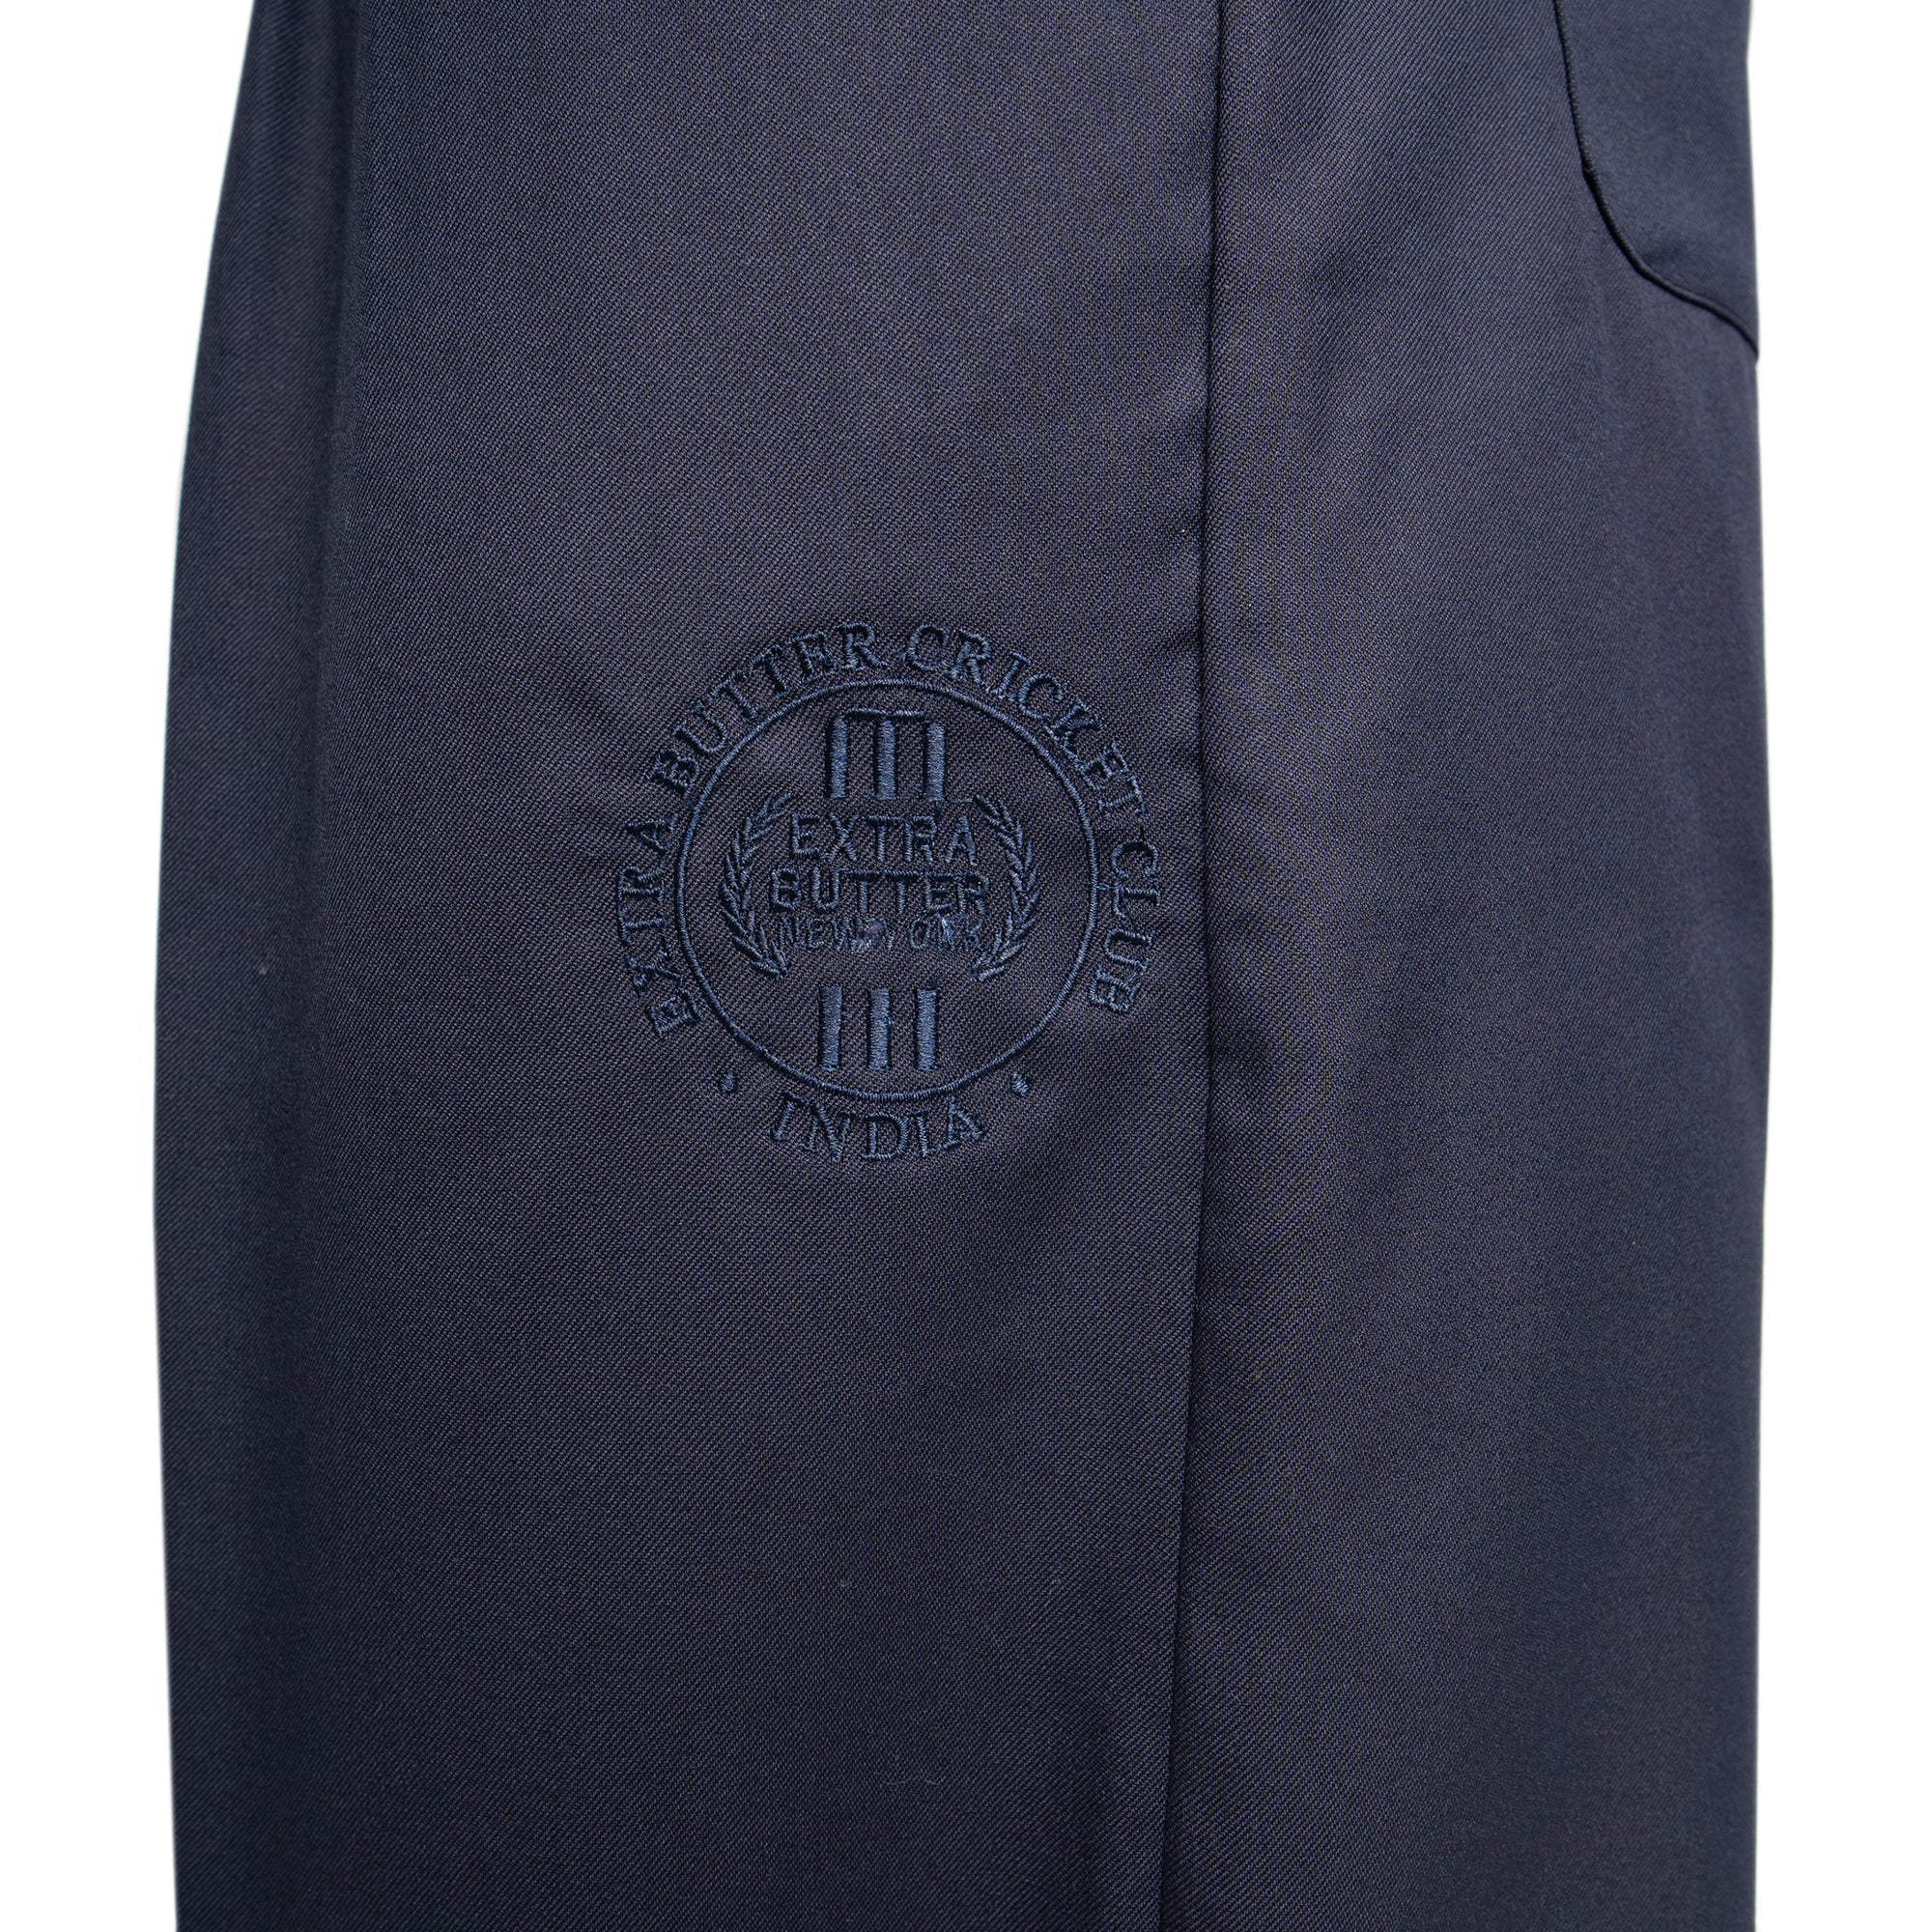 KARL LAGERFELD x CARA DELEVINGNE - TUXEDO PANTS - UNISEX - Trousers - dark  blue/dark brown - Zalando.de